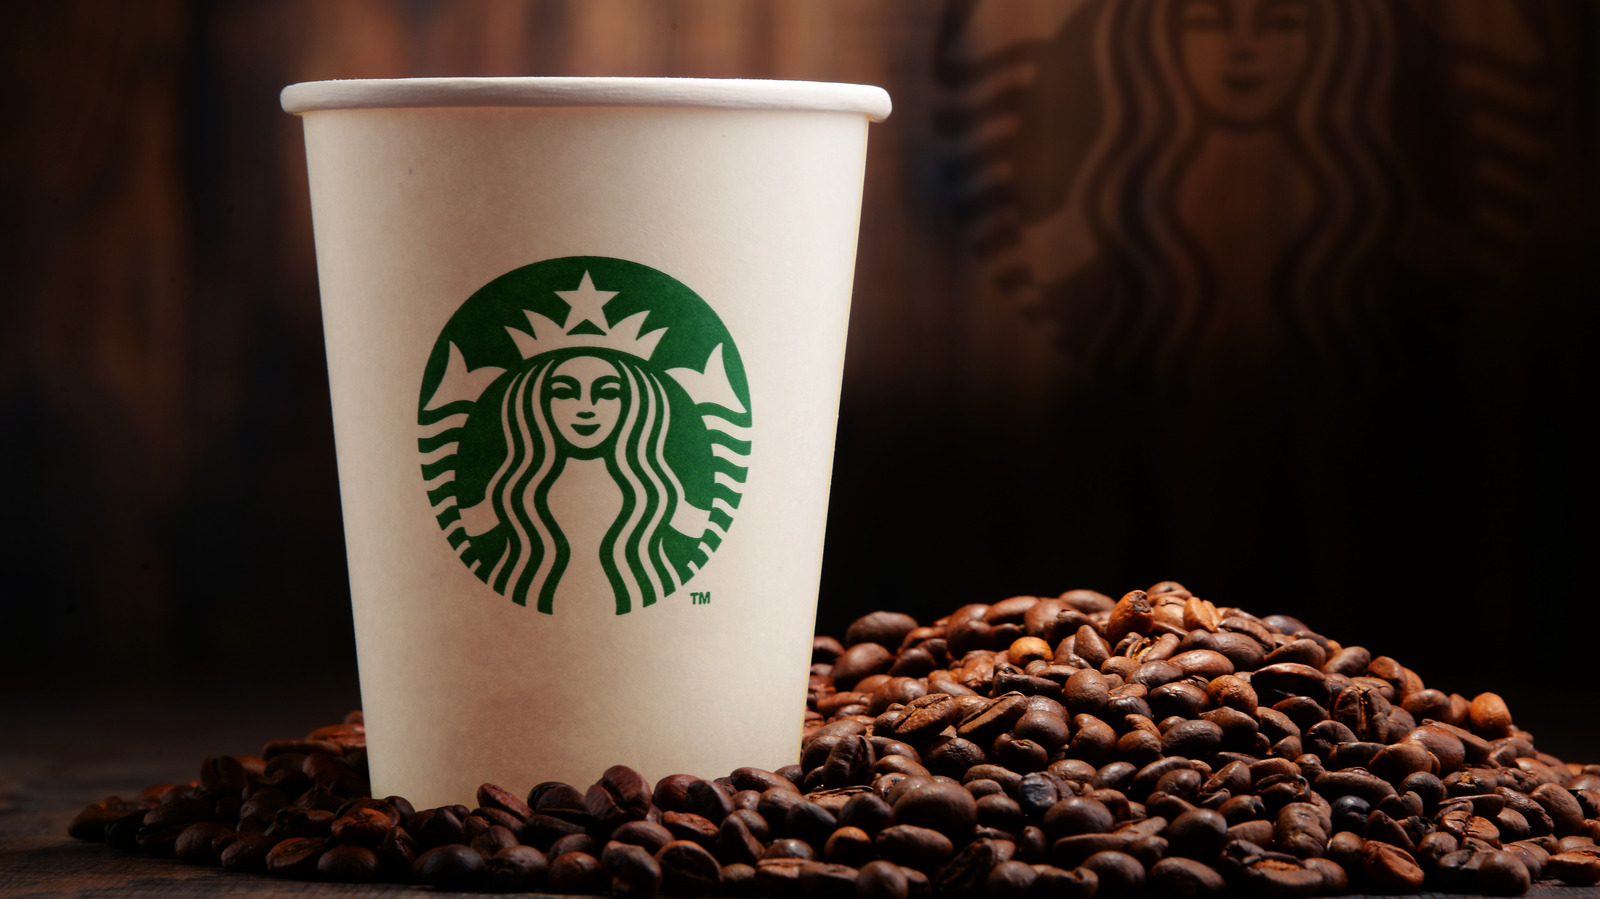 Starbucks Drinks Are 50 Percent Off Every Thursday In December